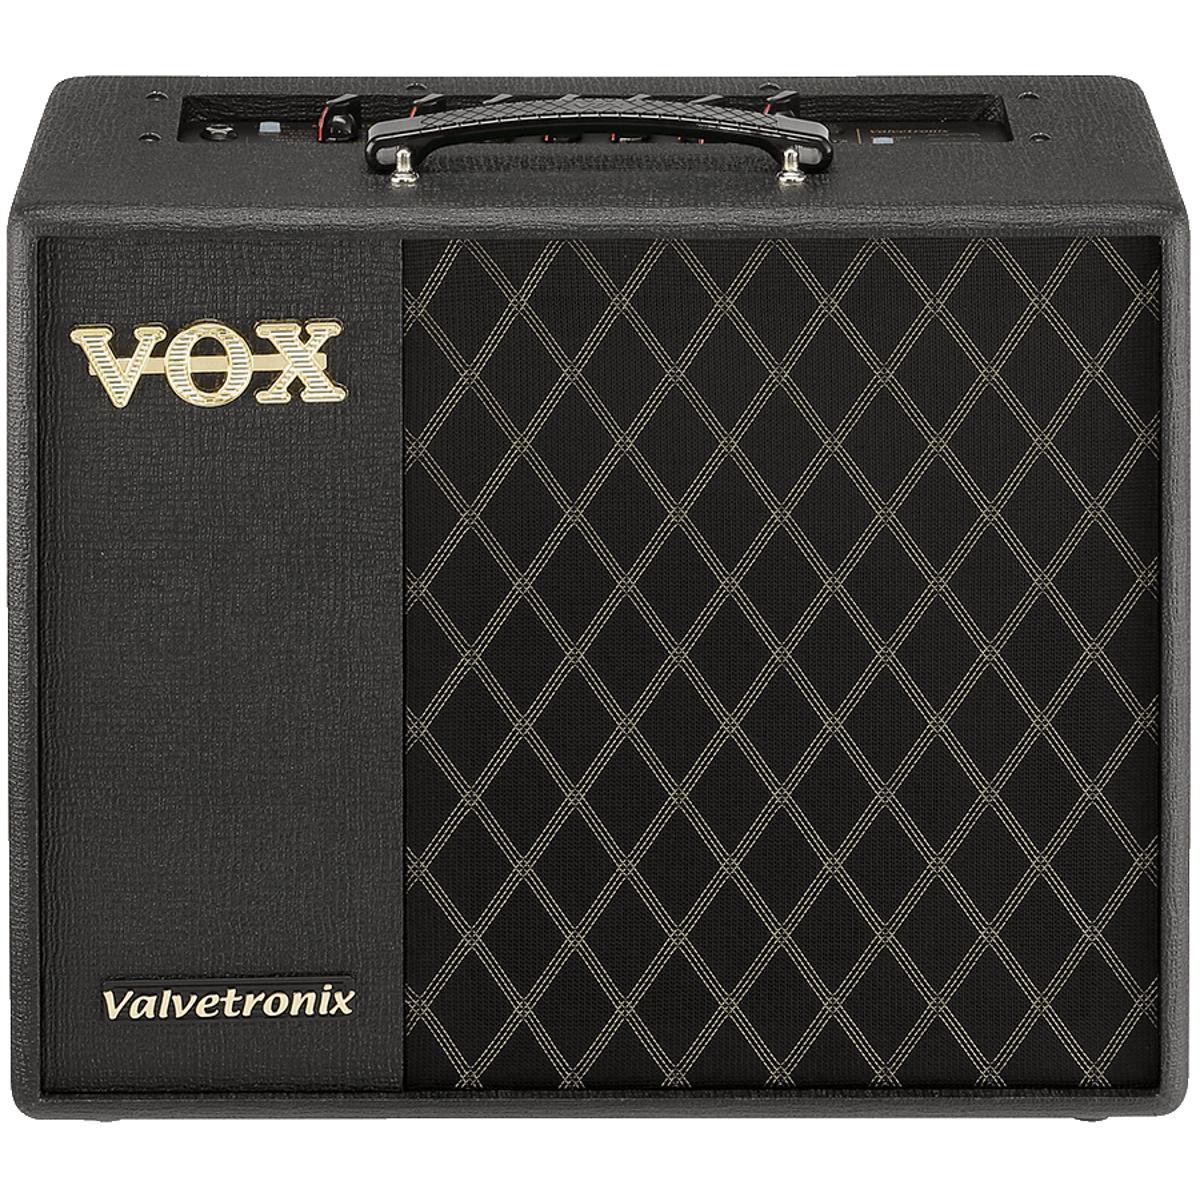 VOX VT40X Valvetronix Guitar Amplifier 40W 1x10 Combo Amp